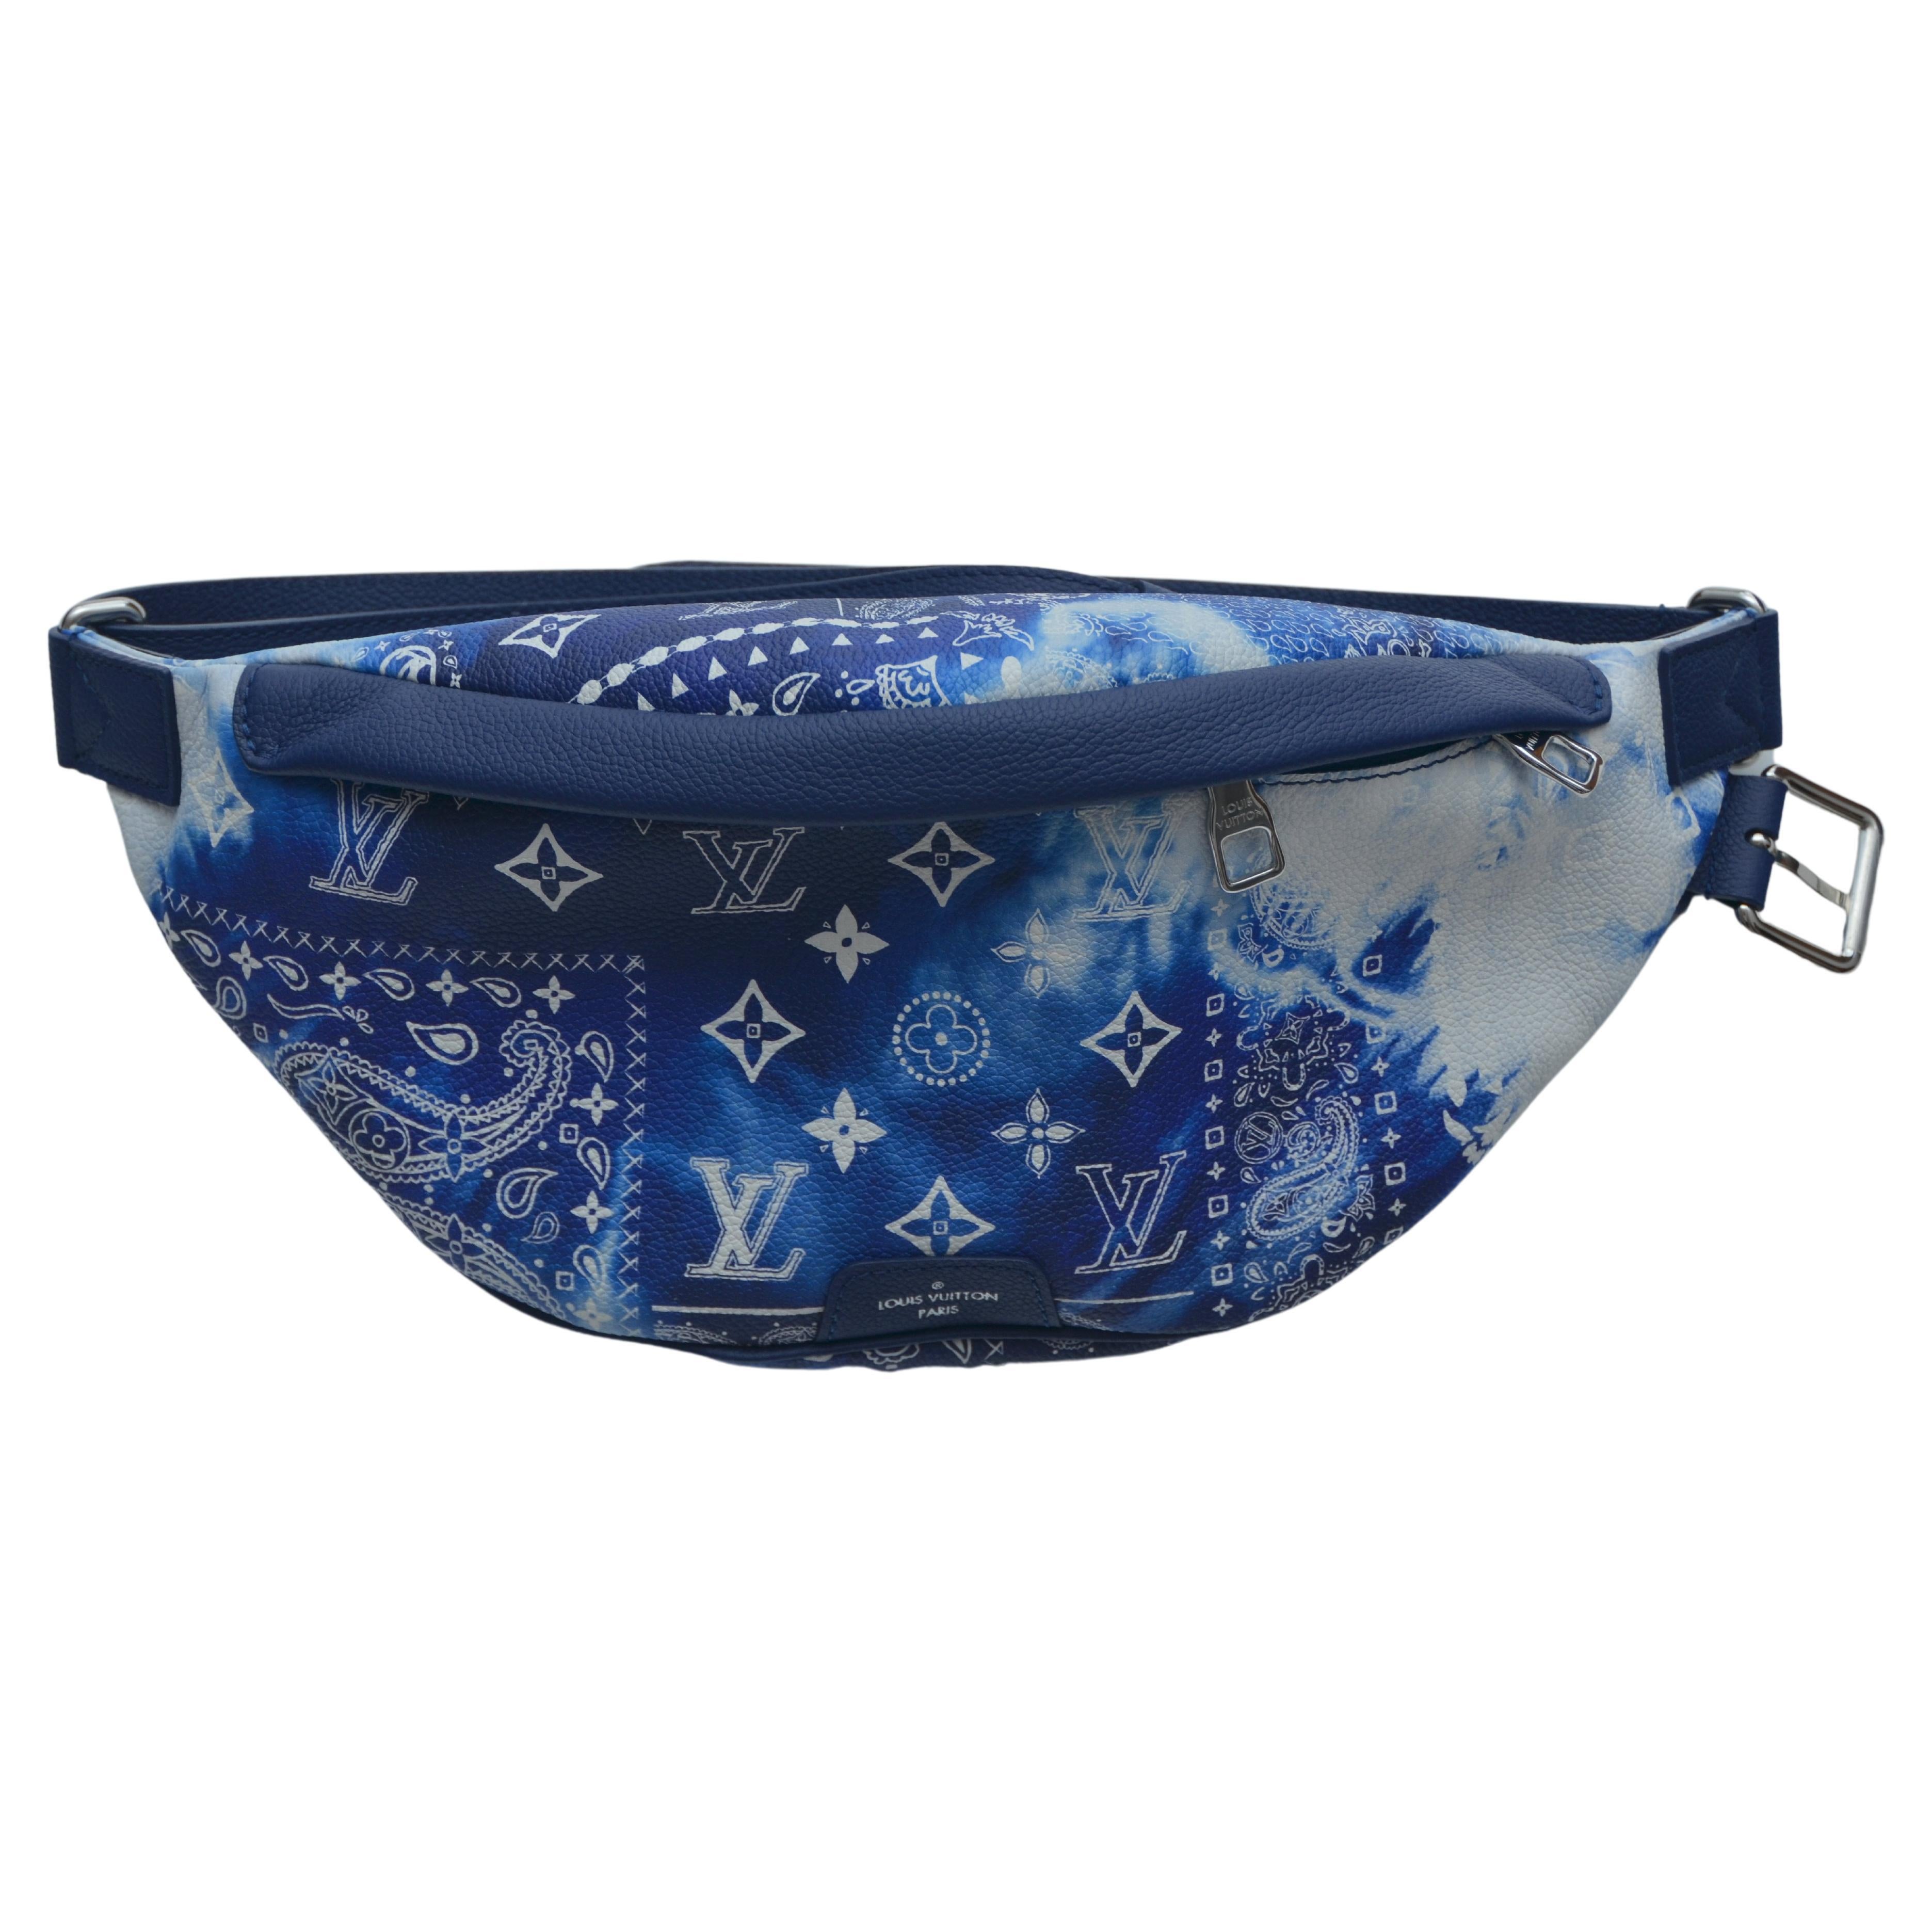  Louis Vuitton Bum Bag Discovery PM Monogram Bandana Bleached Blue  NEW